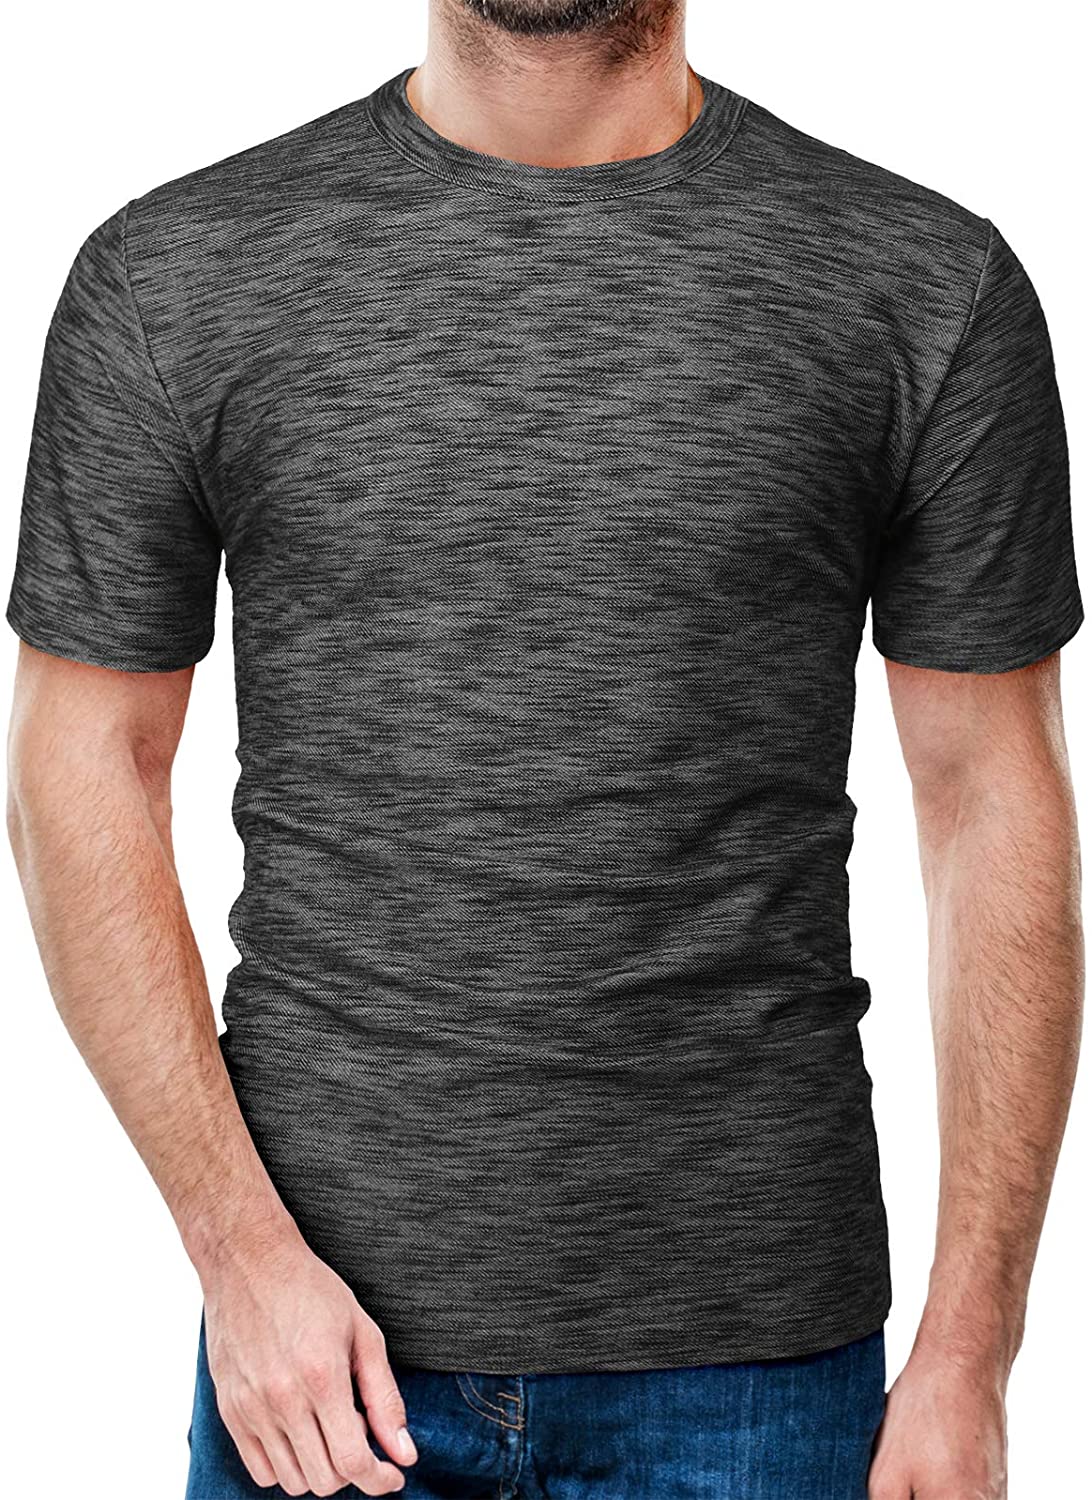 H2H Mens Casual Slim Fit Henley Shirts Short Sleeve Waffle Fabric | eBay